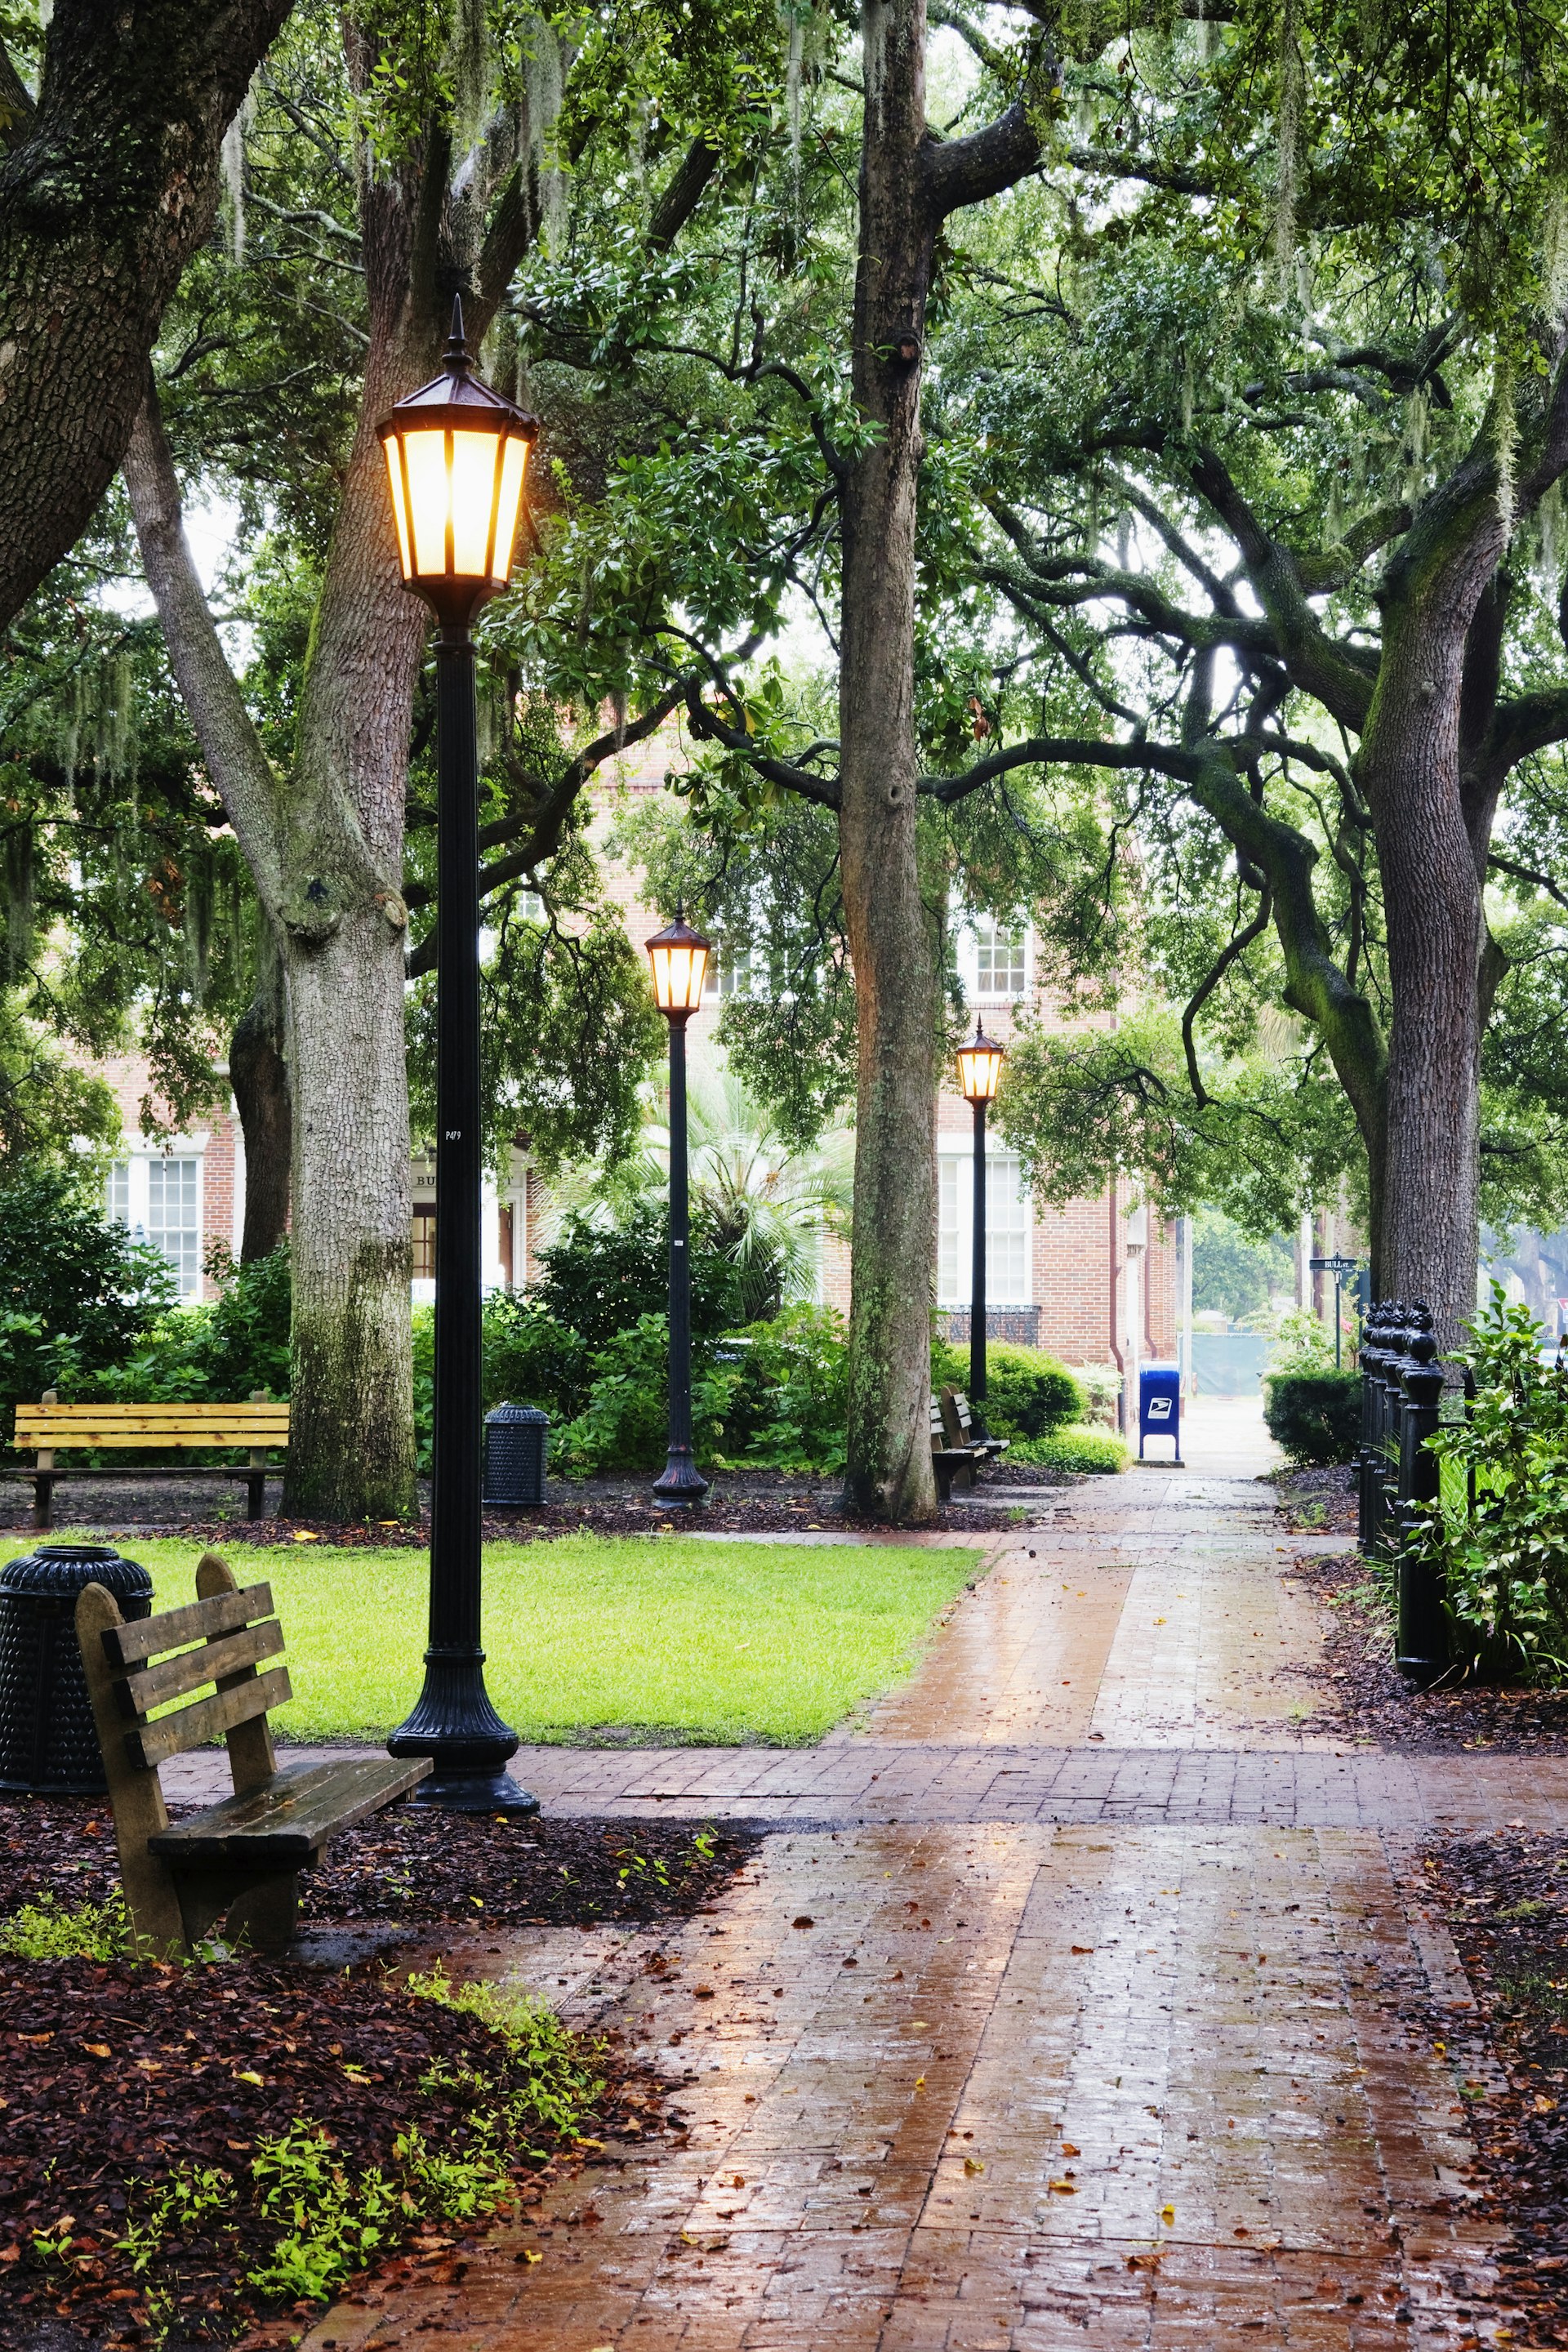 Old-fashioned streetlights line a path through a rainy urban park